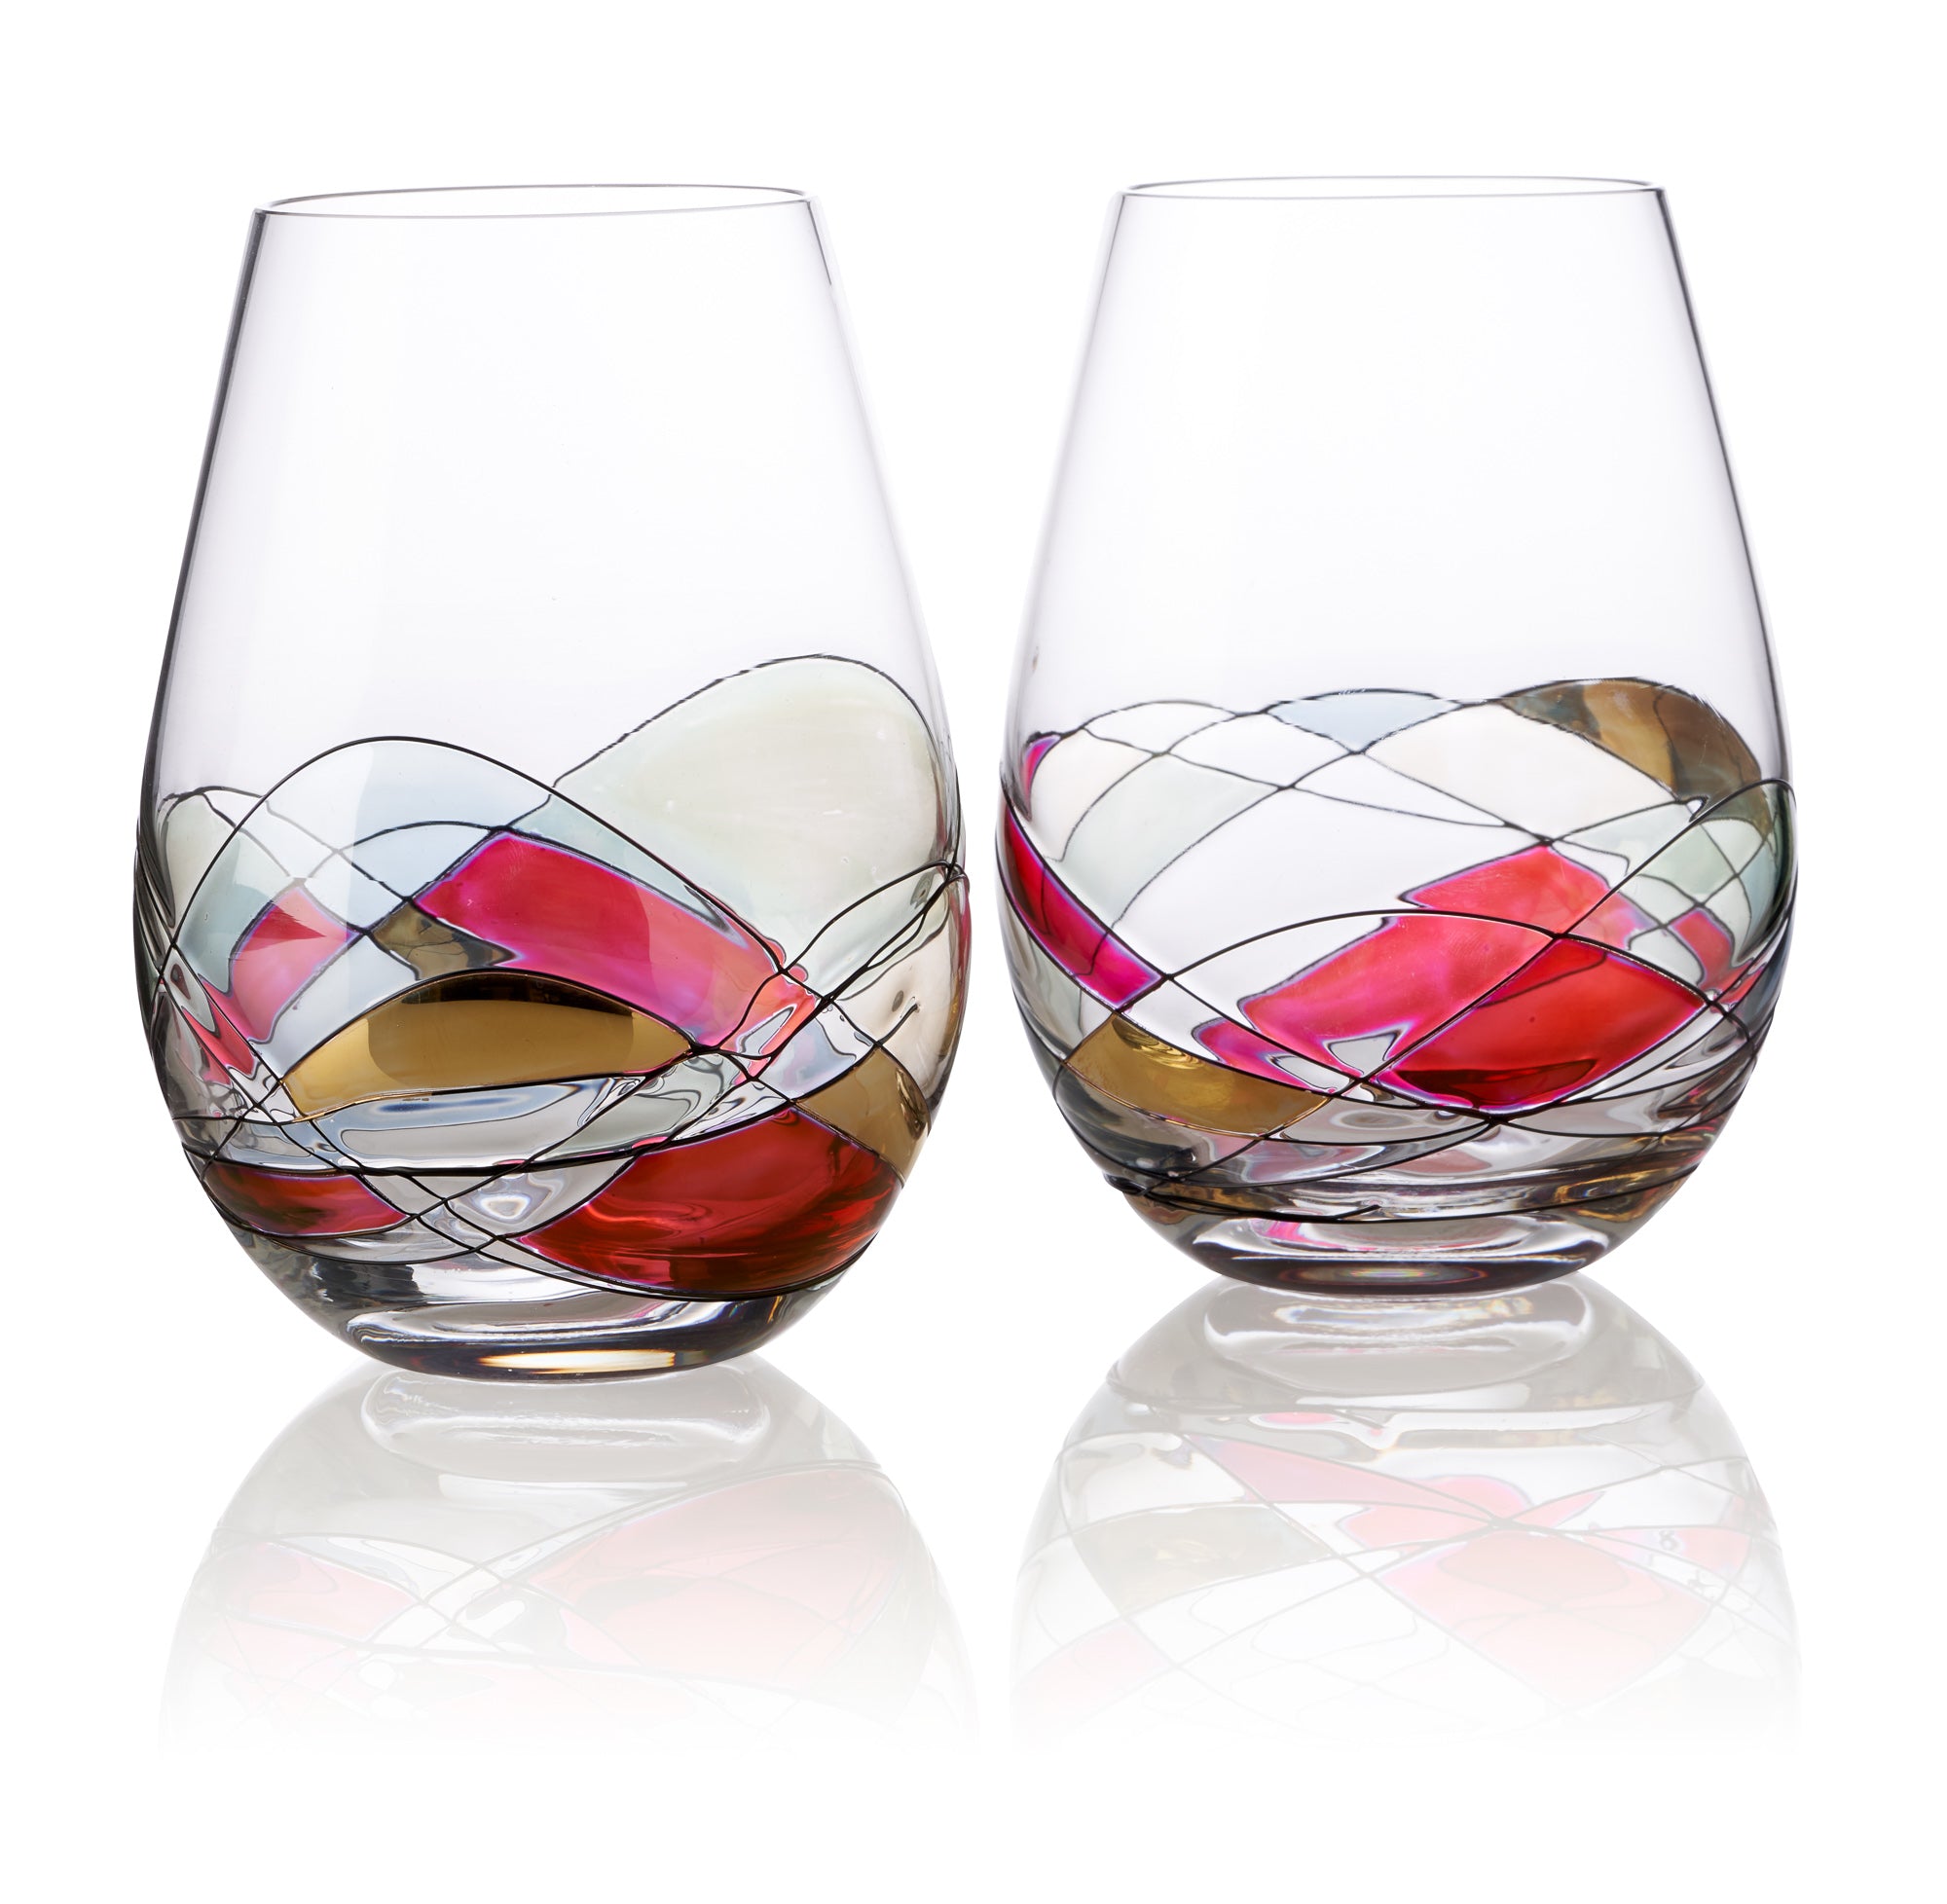 Bezrat Stemless Wine Glasses Set of 2, Hand Painted Large Premium Red Wine